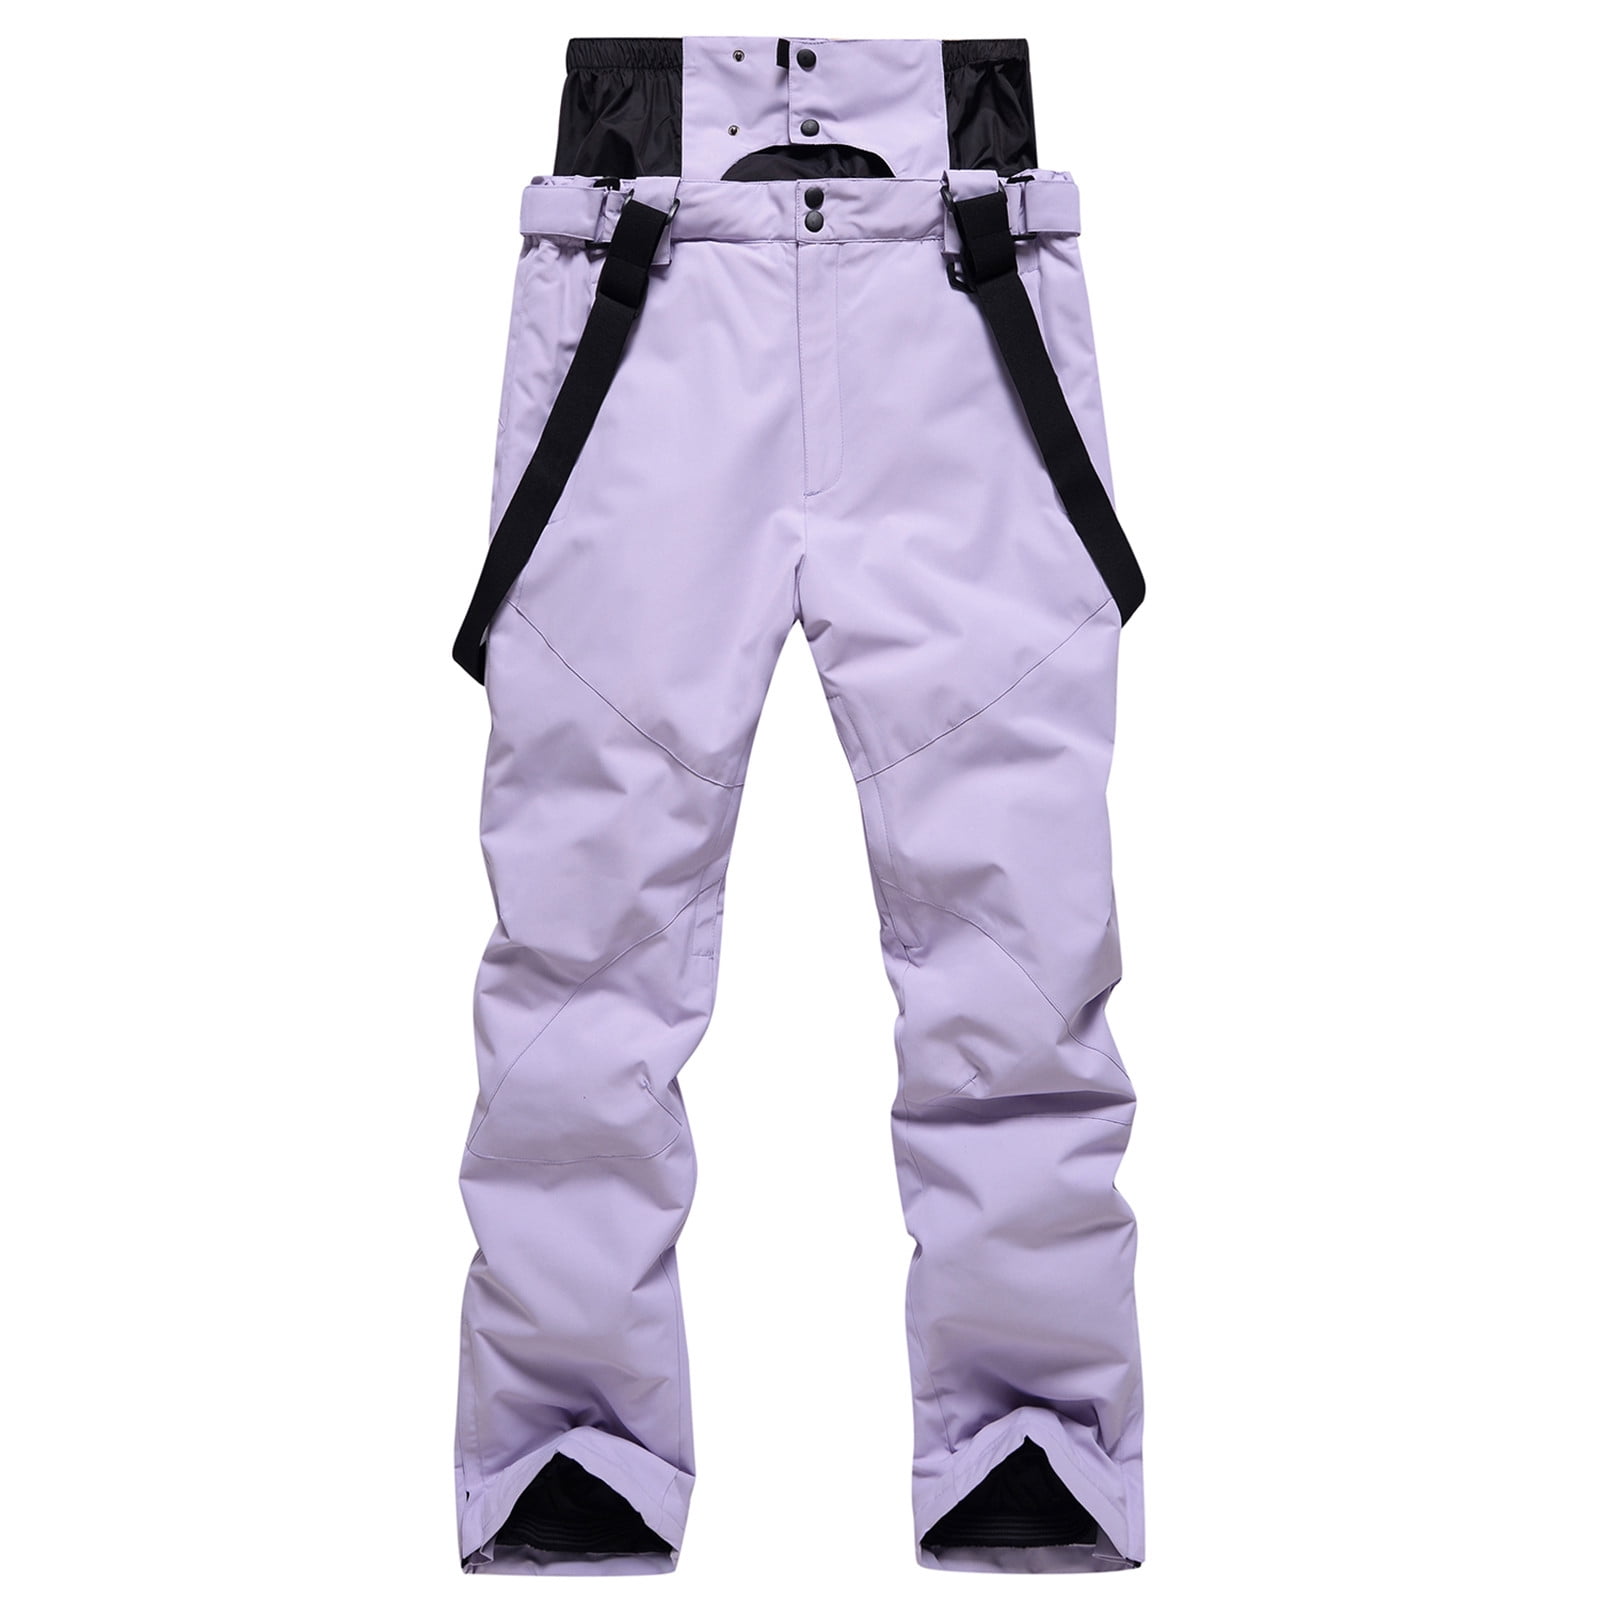 Hfyihgf Women's Unisex Winter Snow Bibs Waterproof Insulated Snowboard  Overalls Outdoor Ski Pants with Zipper Pockets(Pink,XL) 